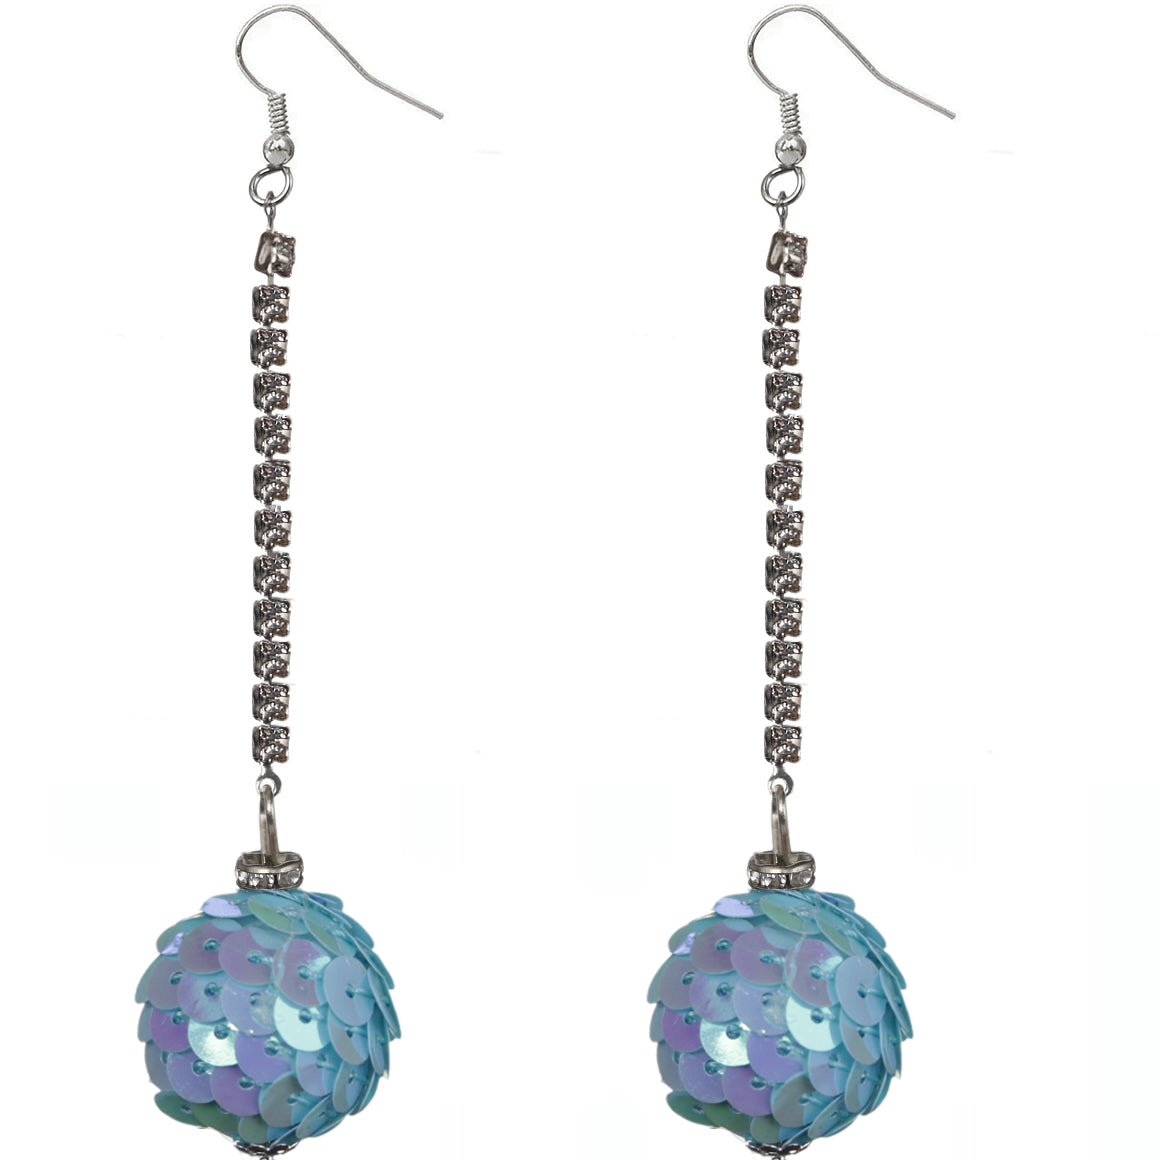 Blue Iridescent Confetti Ball Chain Earrings